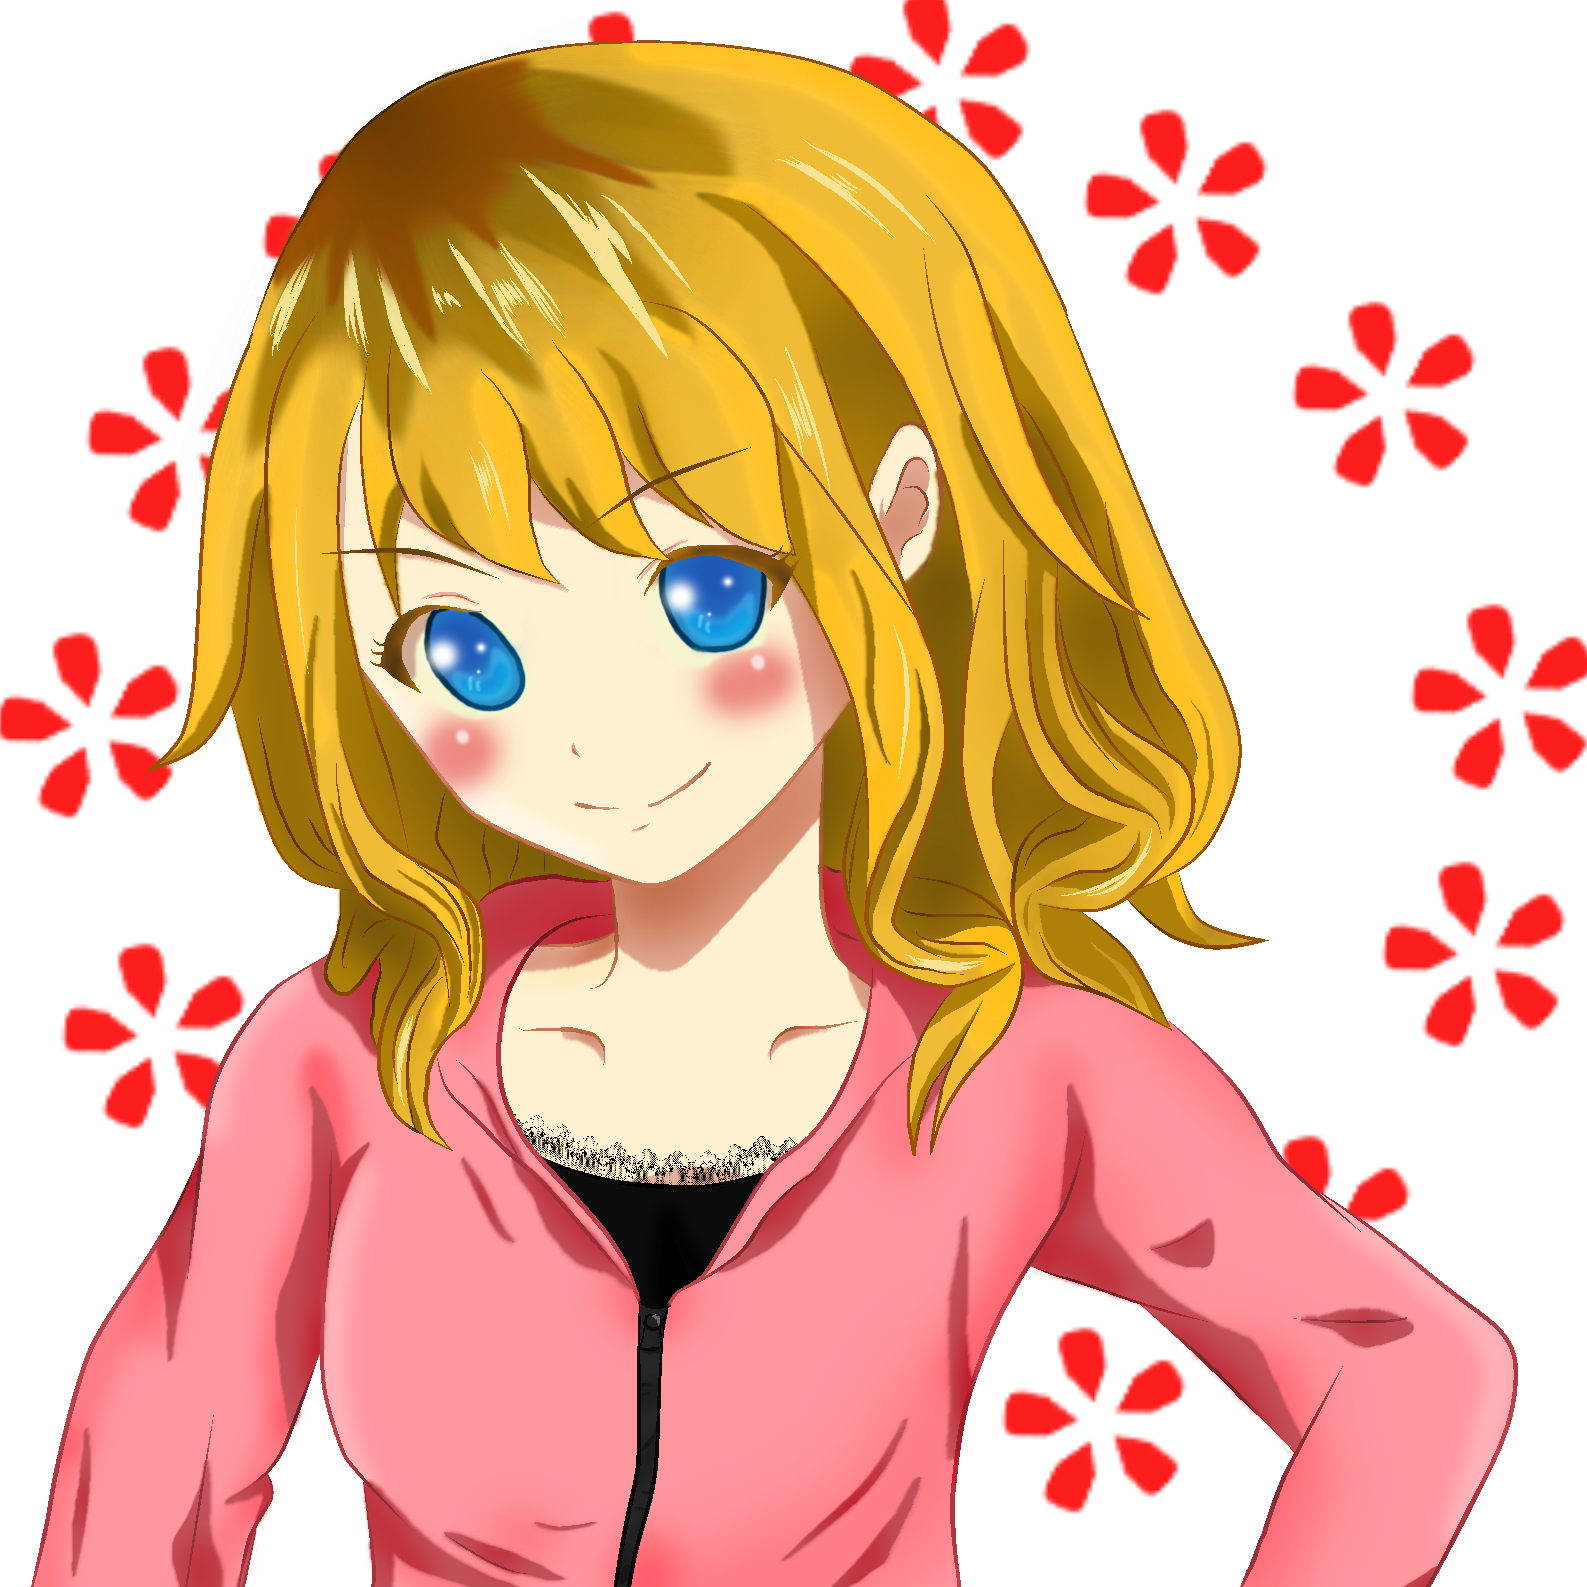 Art Request Blond Blue Eyed Anime Girl By Crafty Lil Vixen On Deviantart